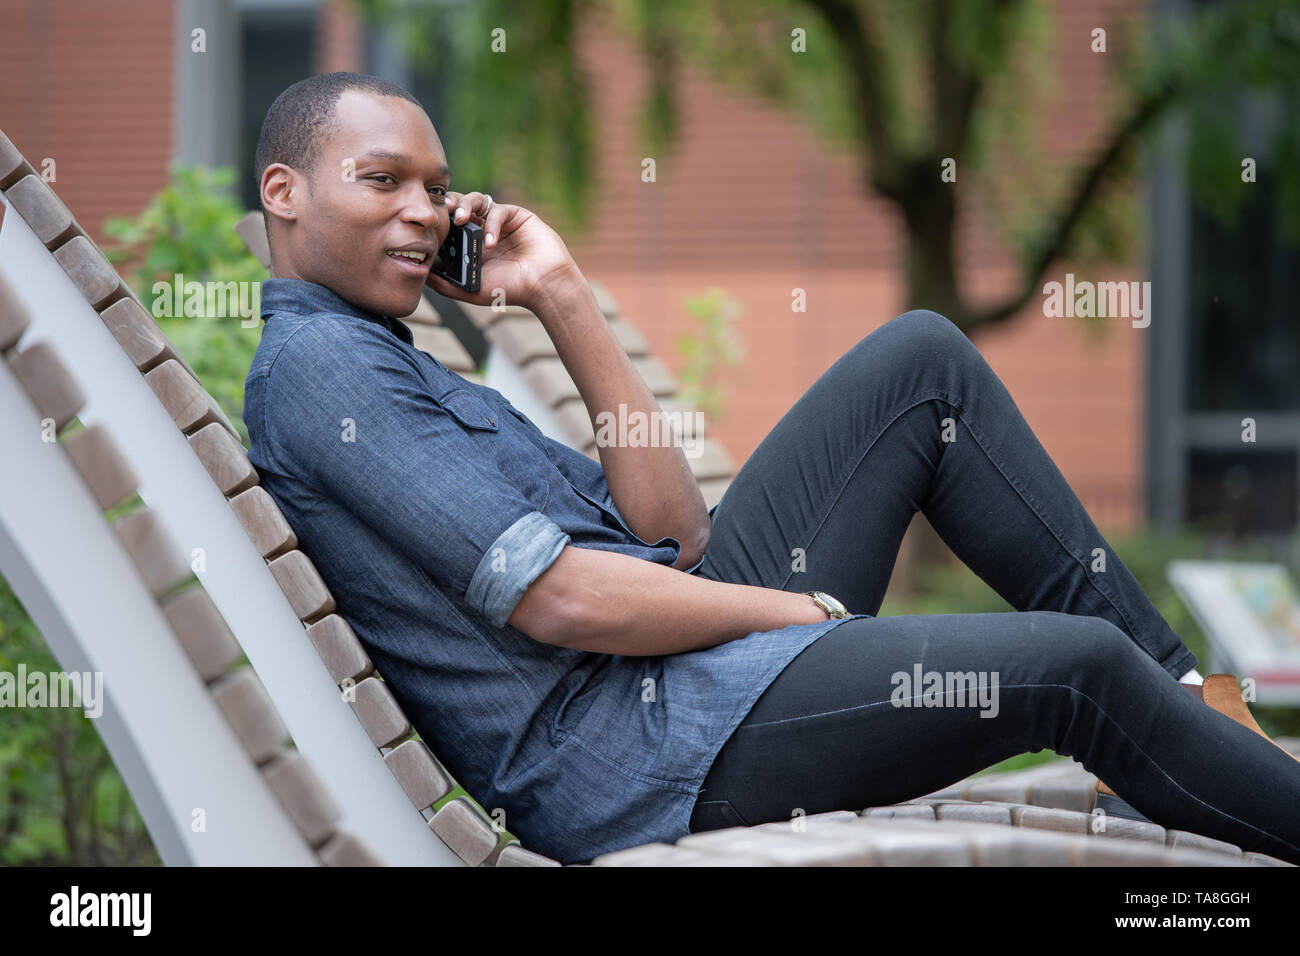 African American man in Philadelphia, 19 years old Stock Photo